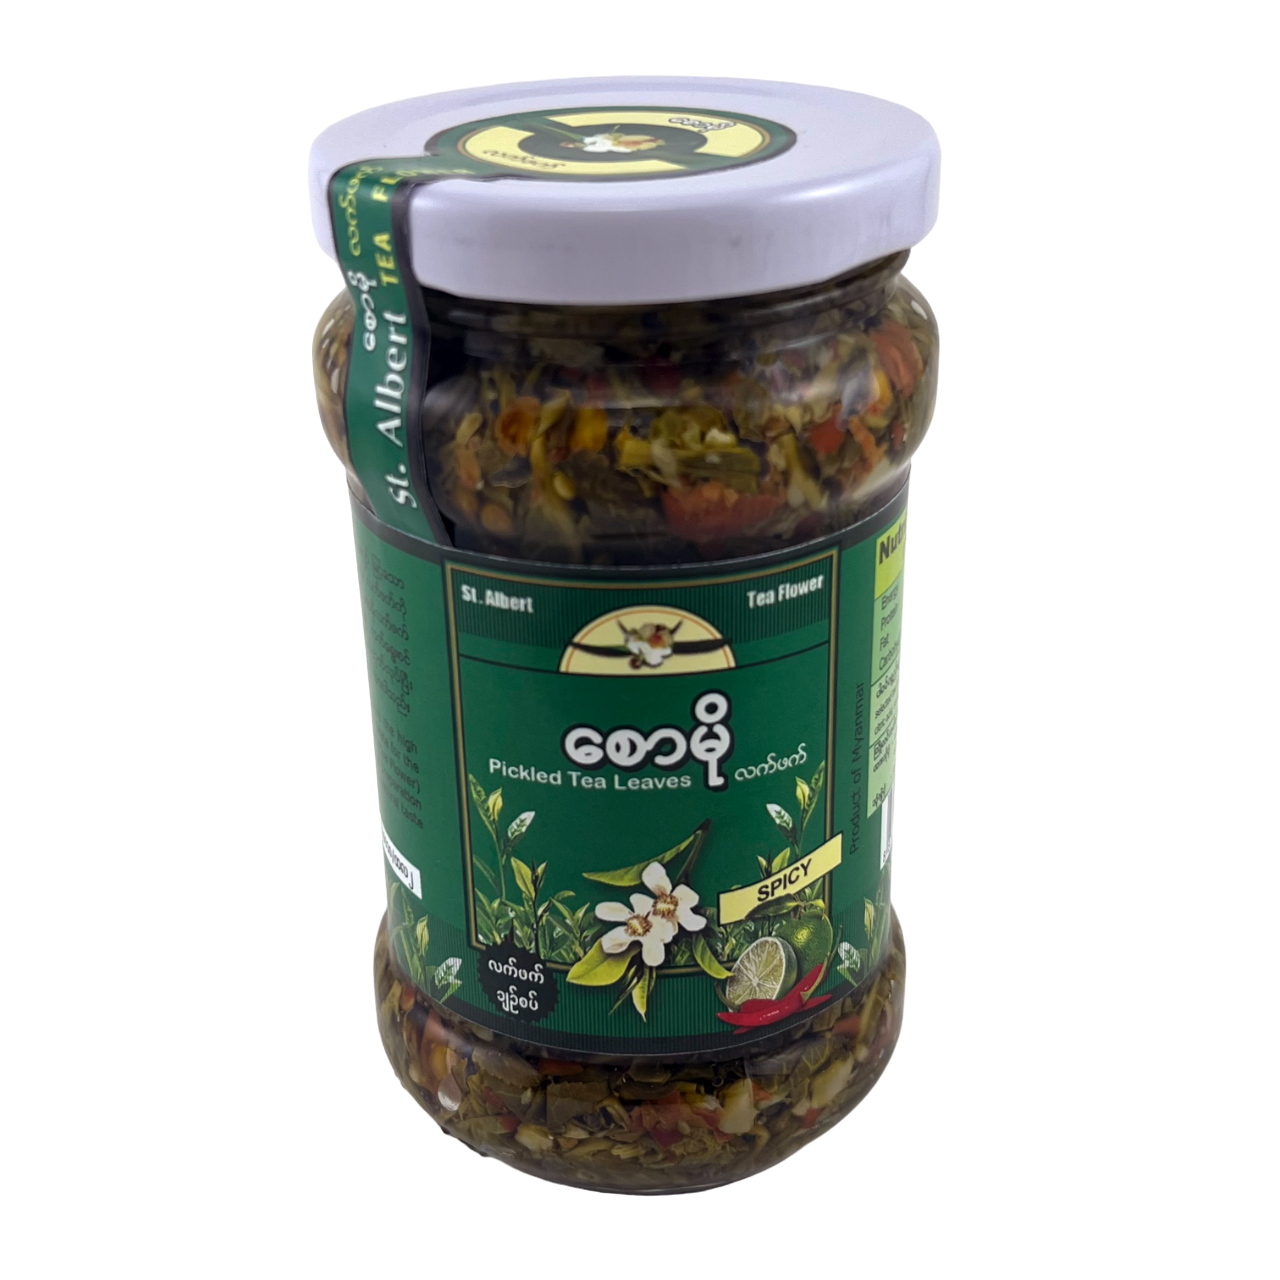 Saw Mo Pickled Tea Leaves (Spicy) (စောမို ချဉ်စပ် လက်ဖက်) 311g (11oz)